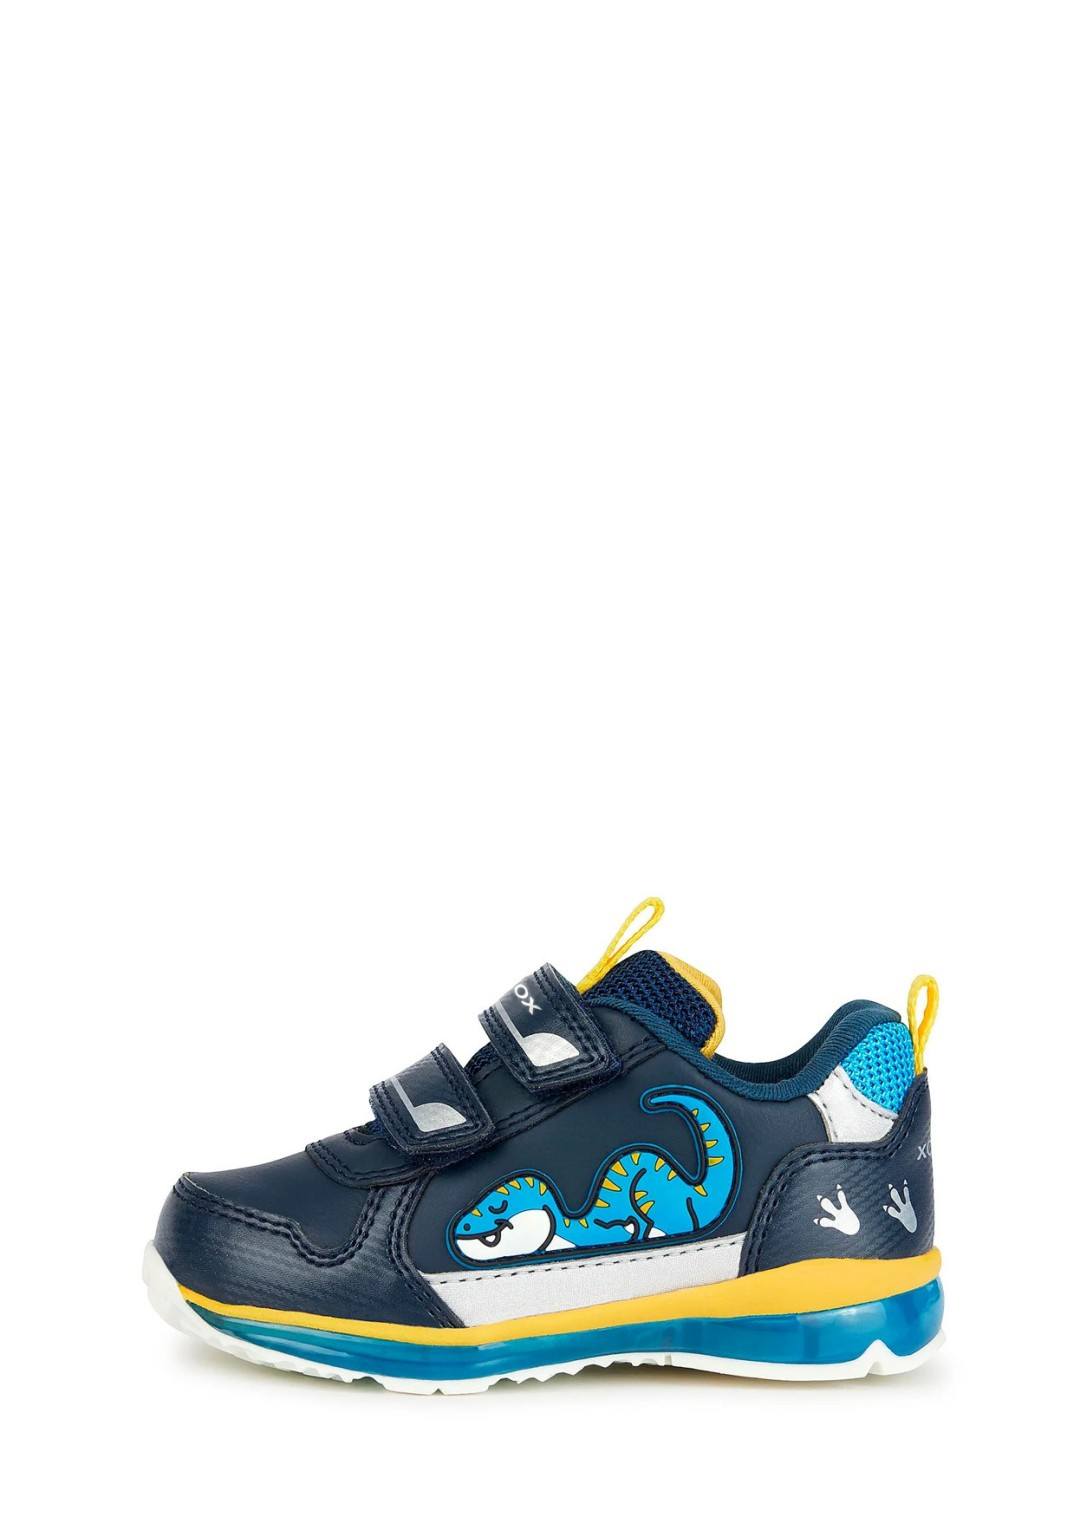 Geox - Sneaker DInosauro - Bimbo - B3584A